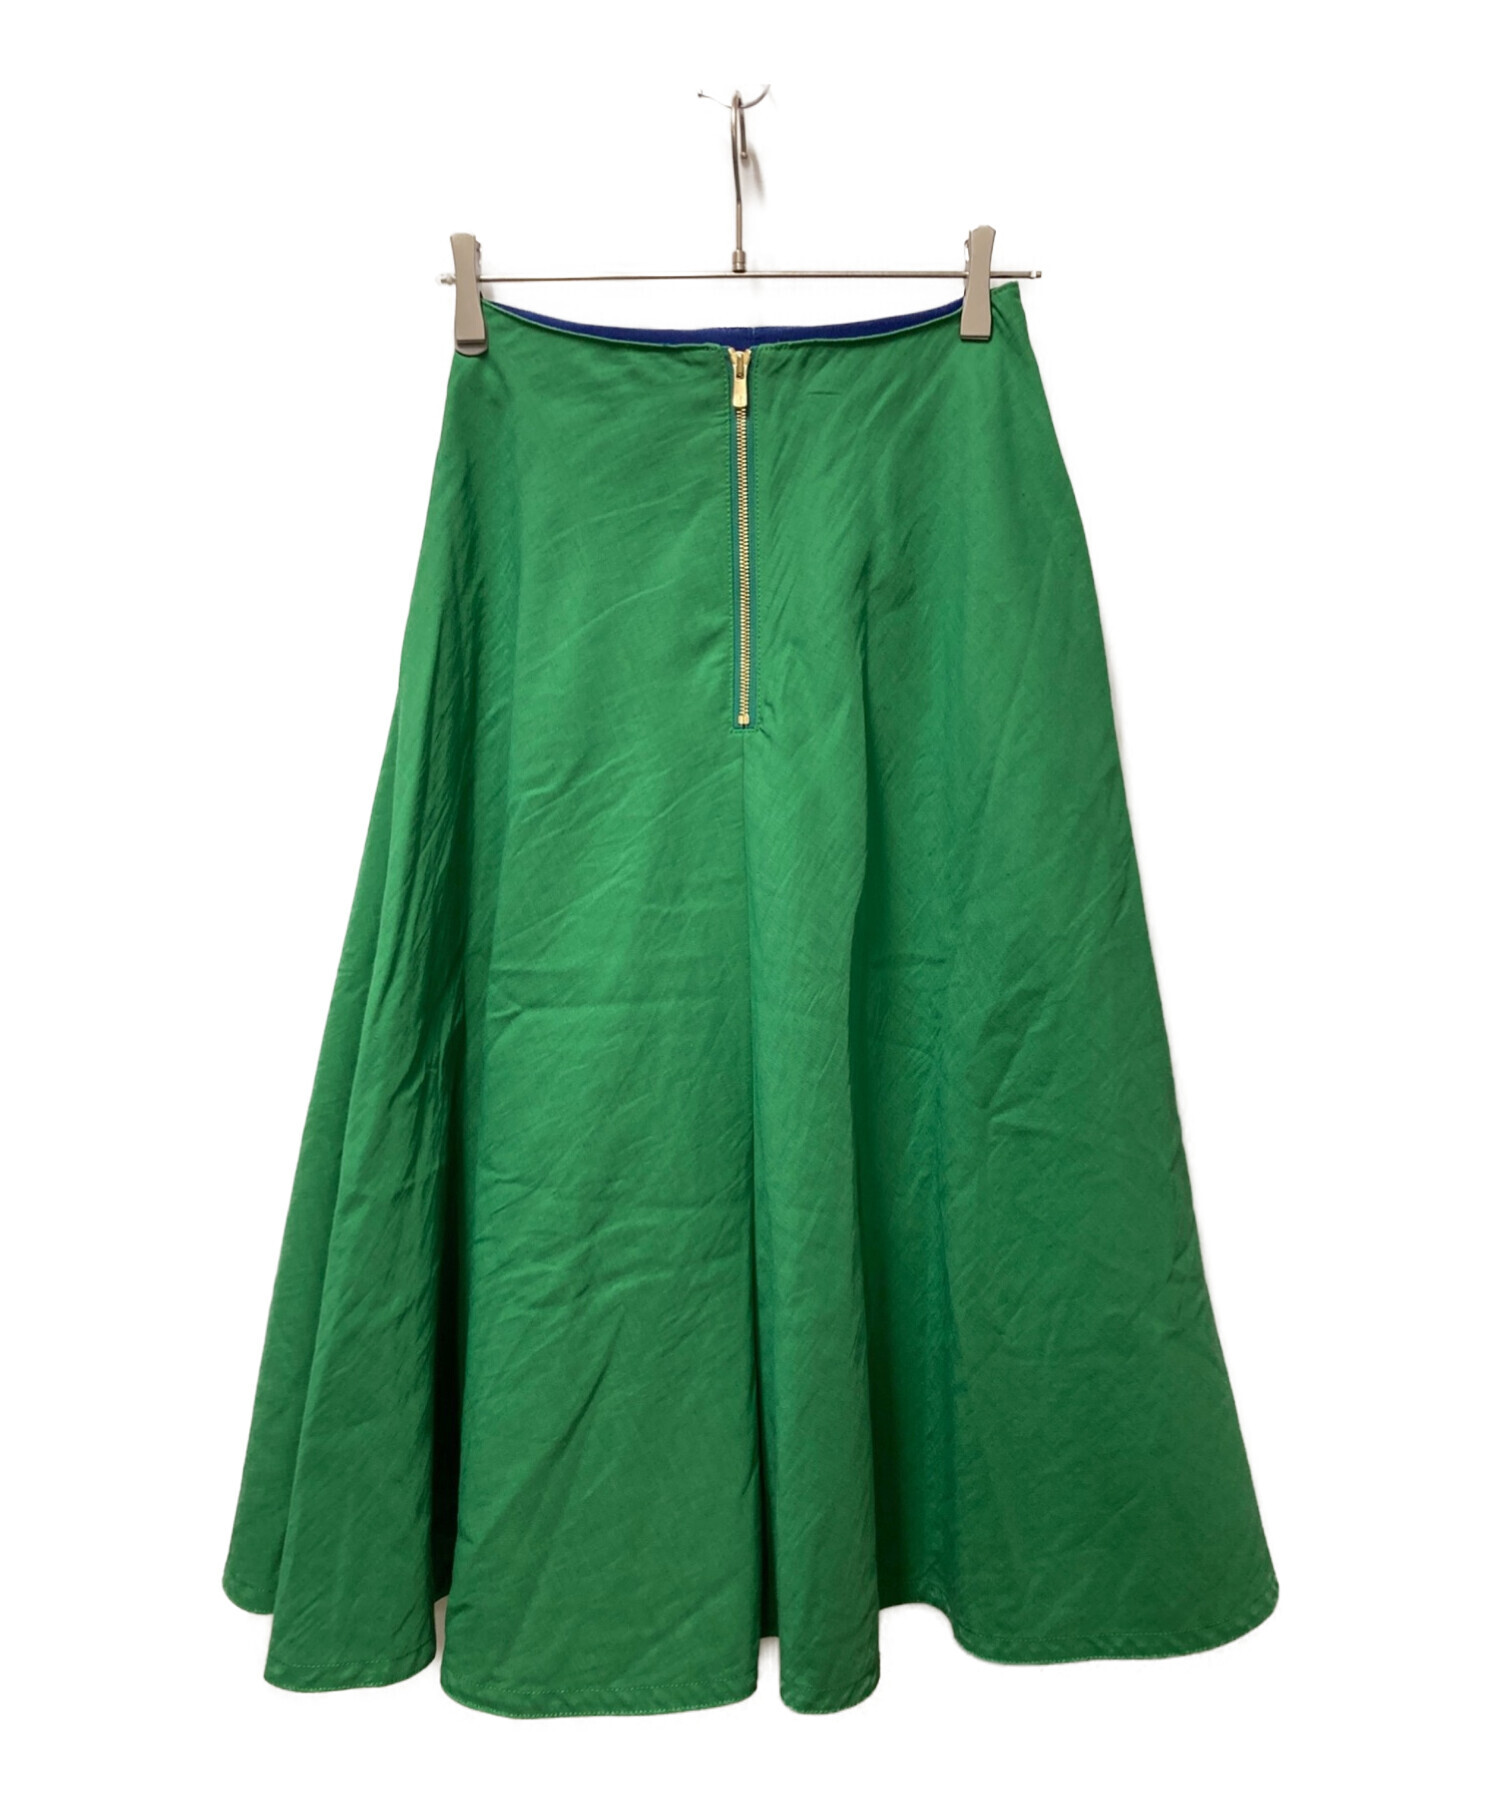 YORI (ヨリ) リネン混スカート グリーン サイズ:36